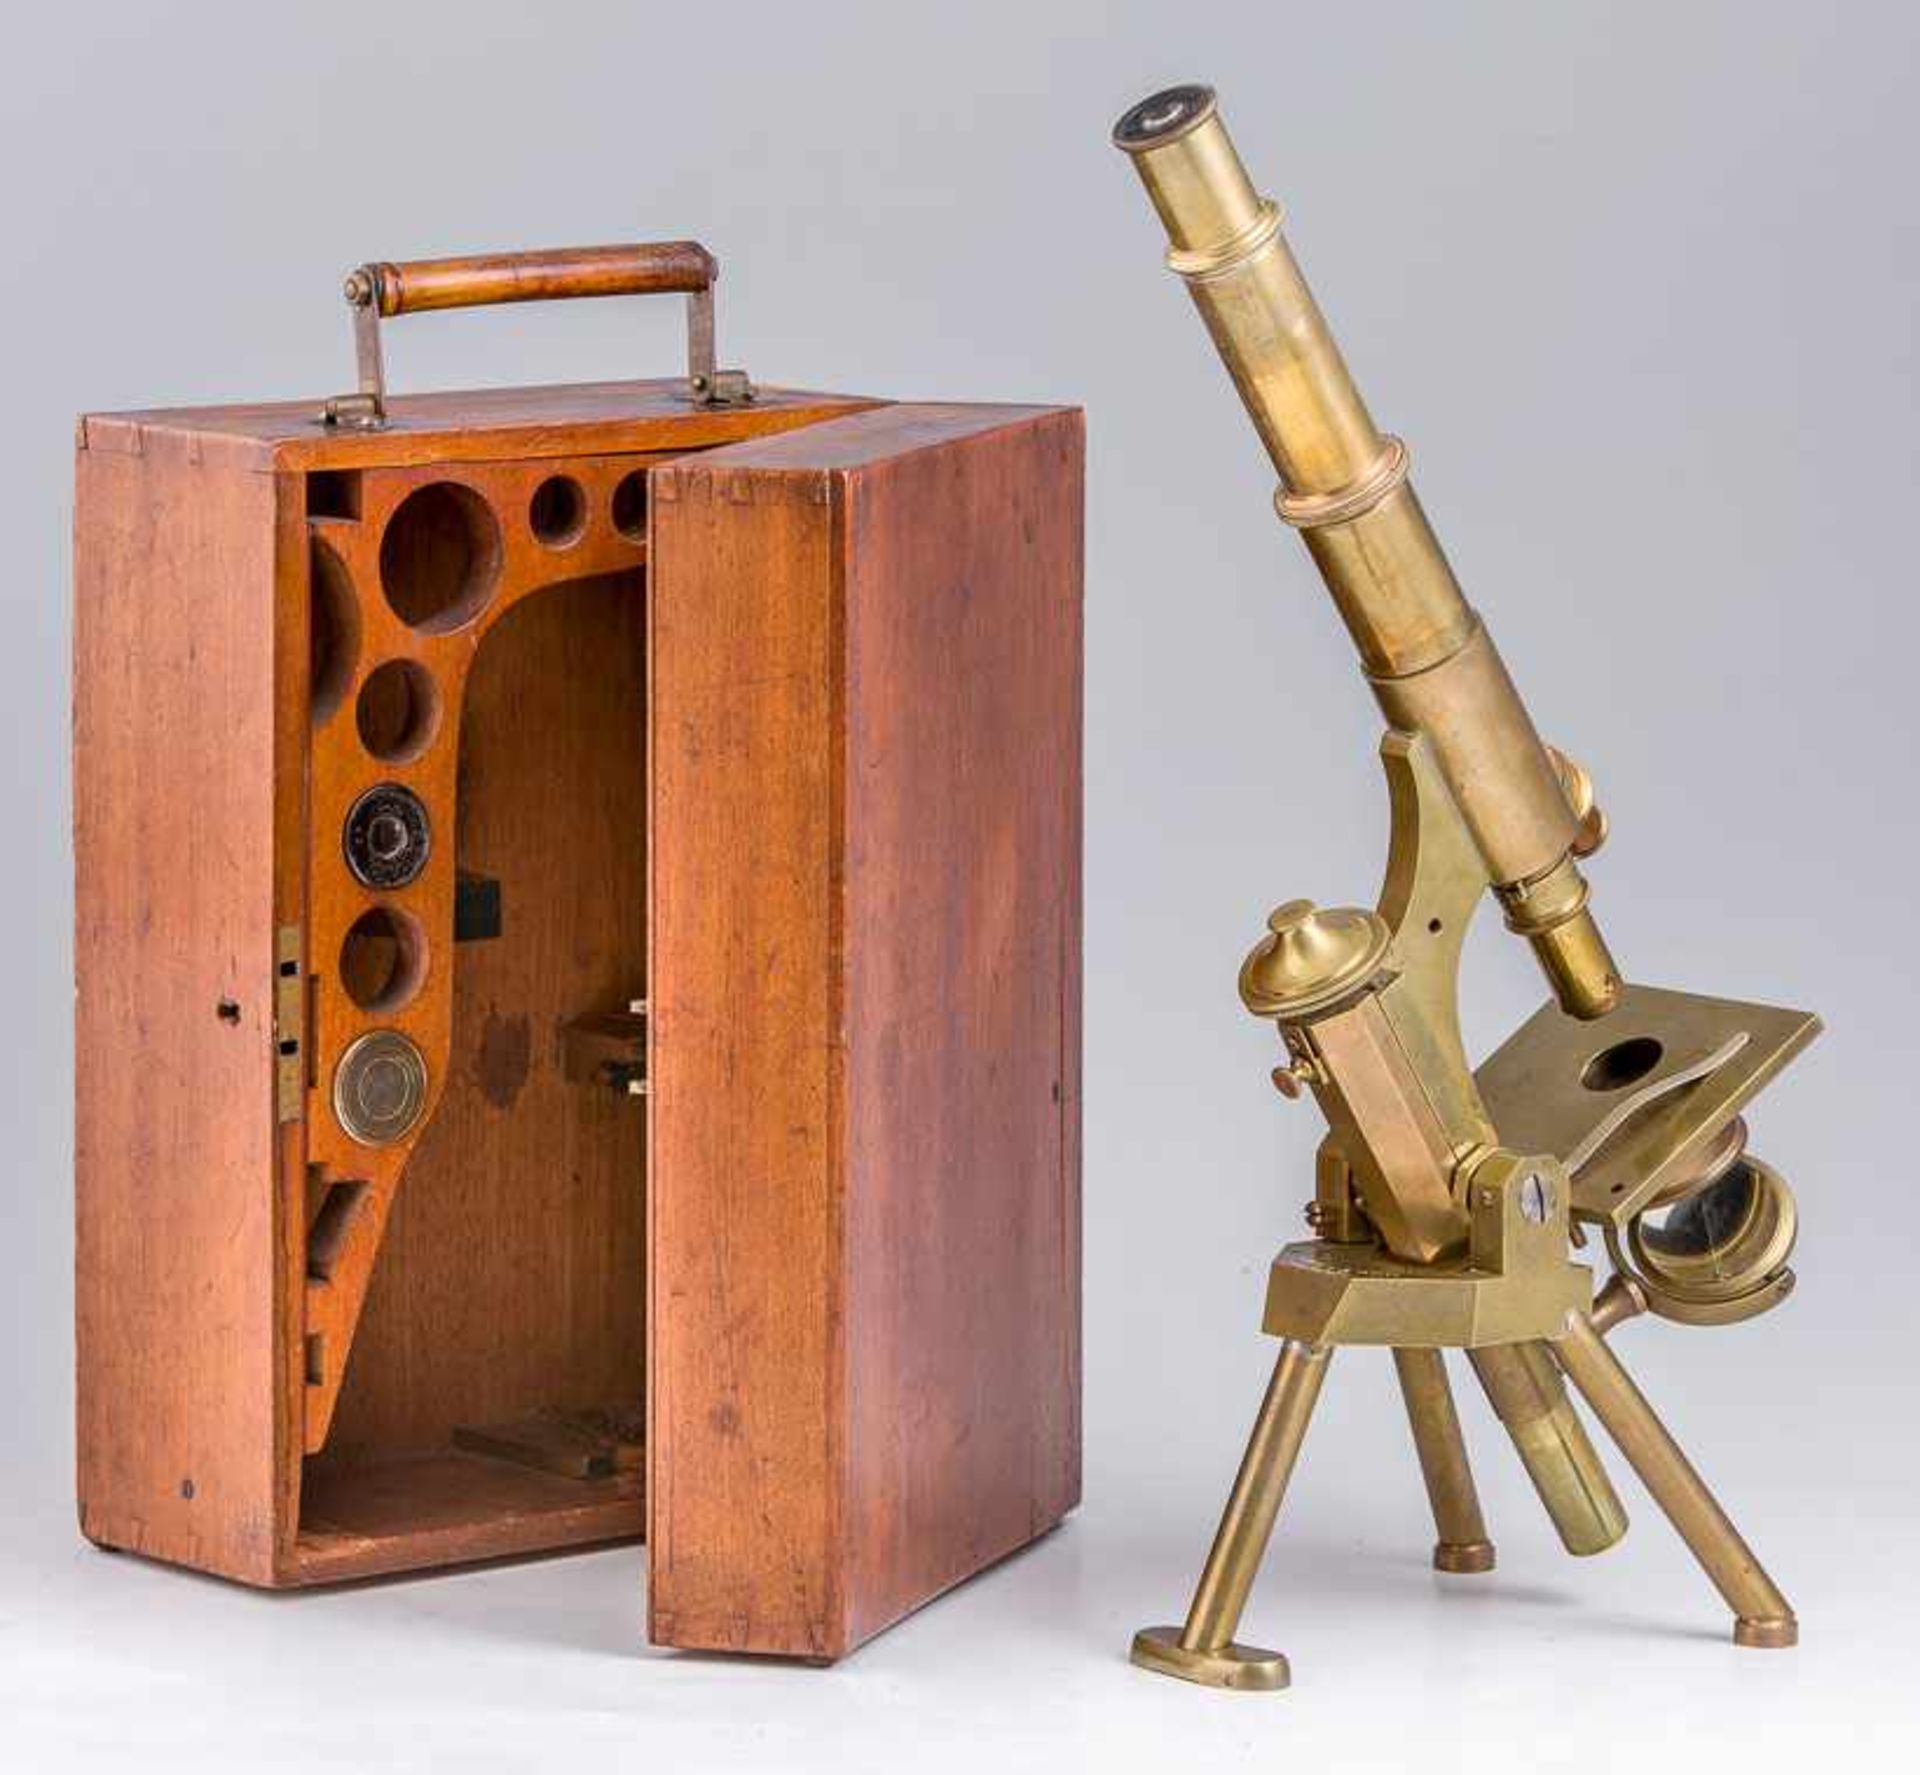 Mikroskop2. H. 19. Jh.Fa. "J. Swift & Son, London No. 13544". Messinggehäuse auf drei Füßen.